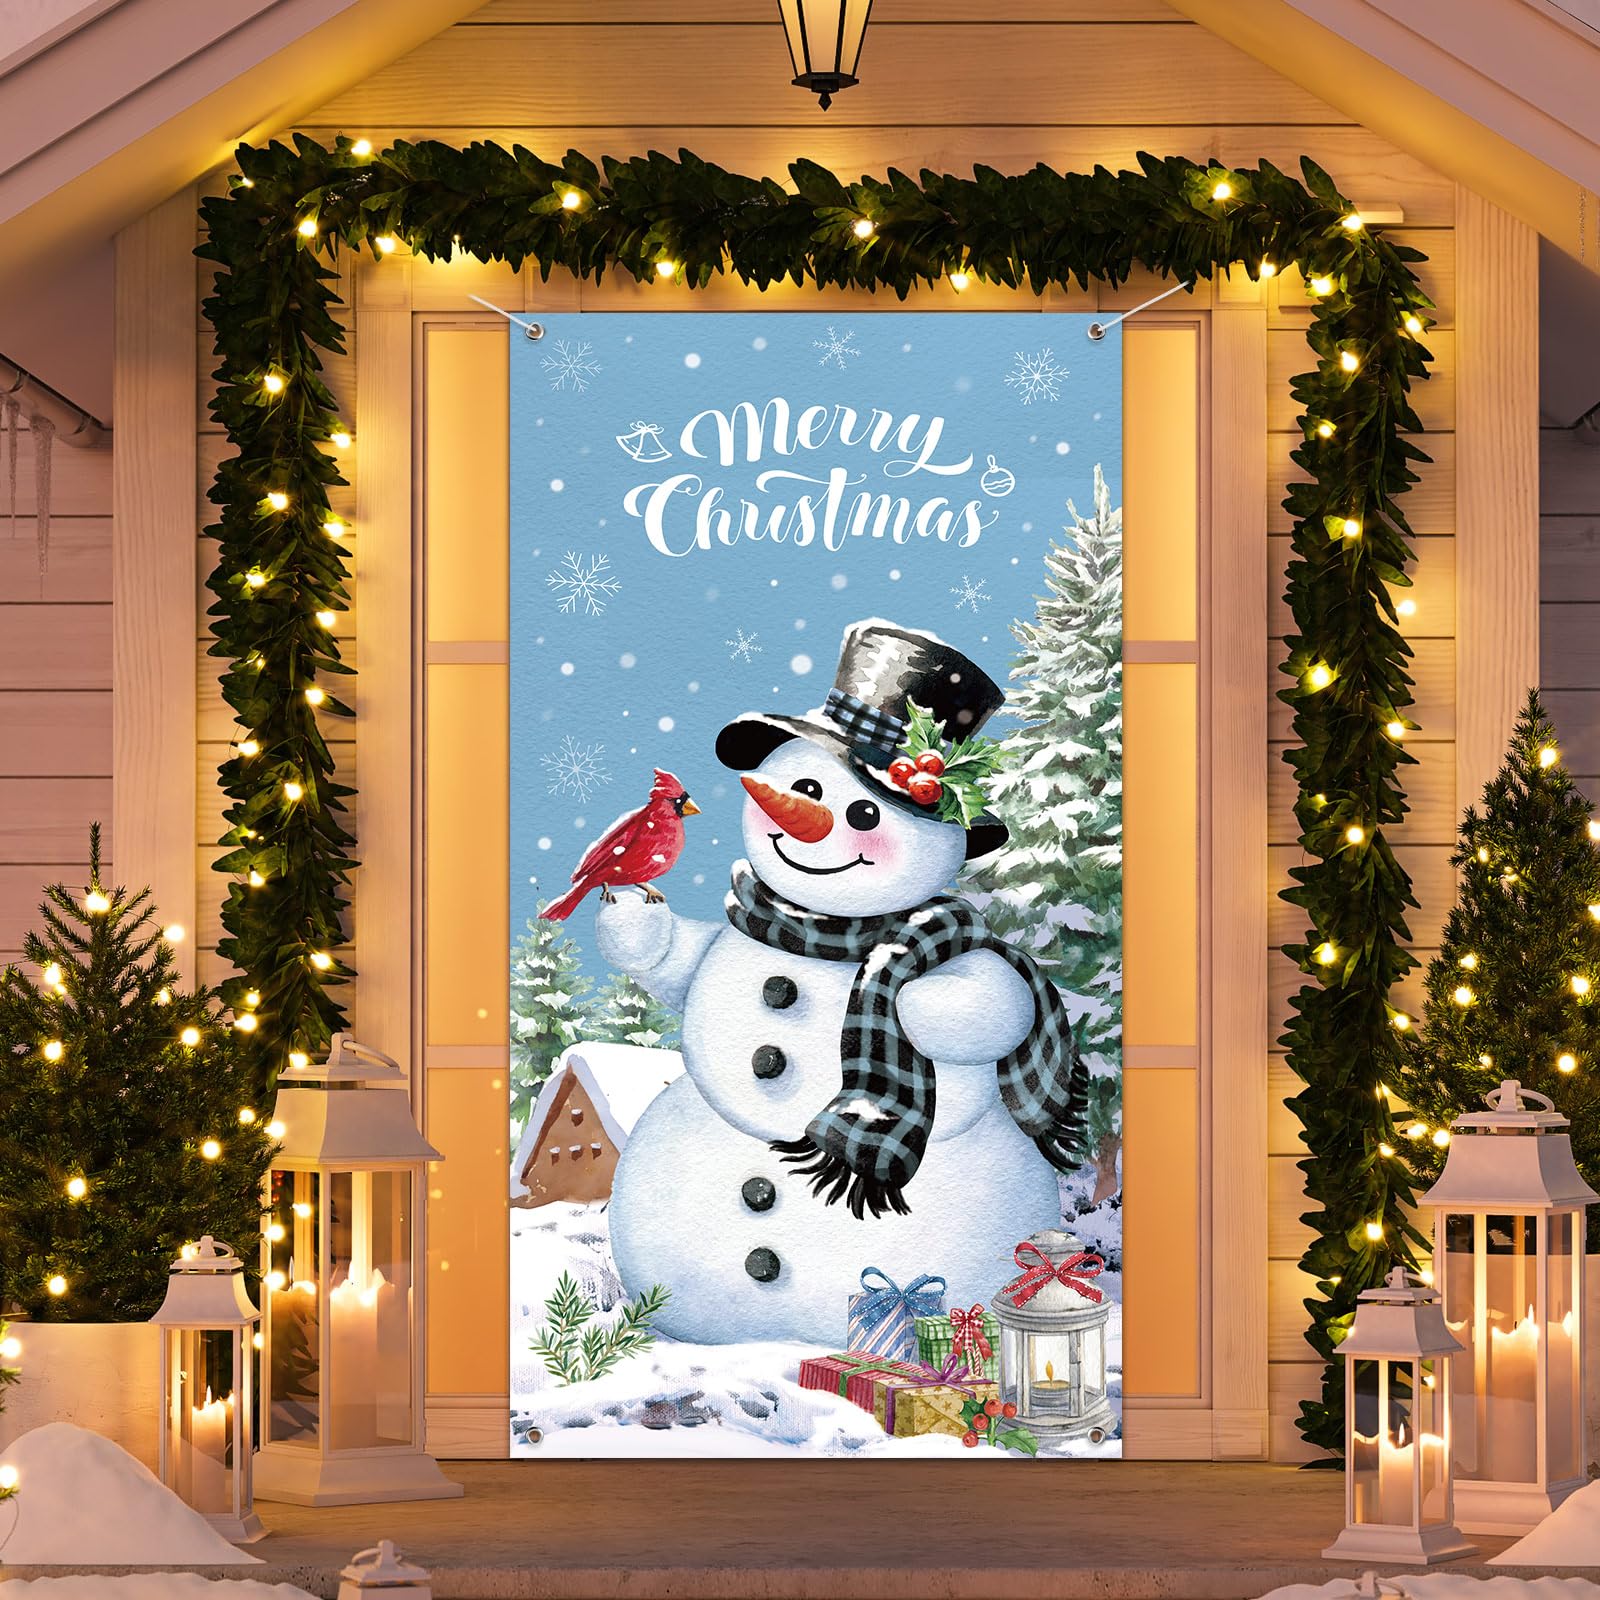 Christmas Snowman Door Cover Merry Christmas Door Decorations Winter Snowman Backdrop Background Banner for Front Door Porch Xmas Party Decor Supplies (Blue)